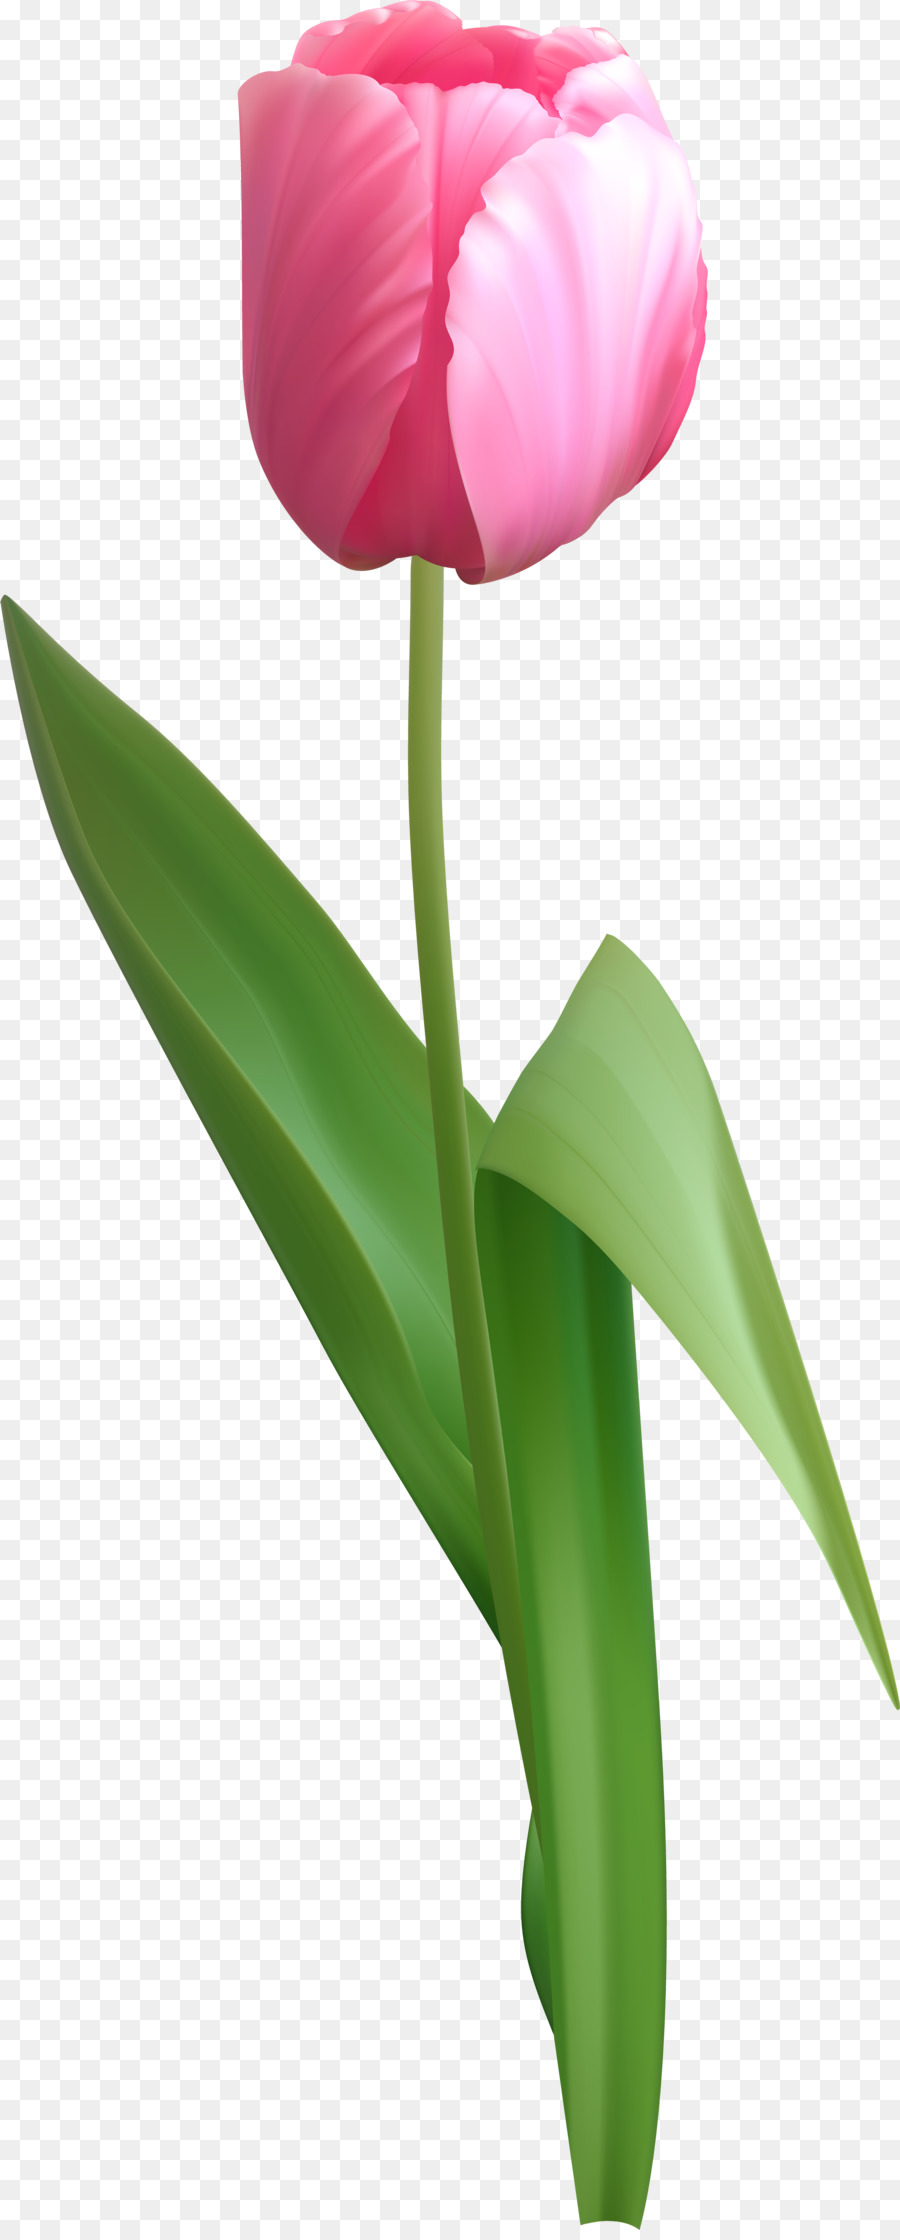 Portable Network Graphics Clip art Tulip Flower Bild - 